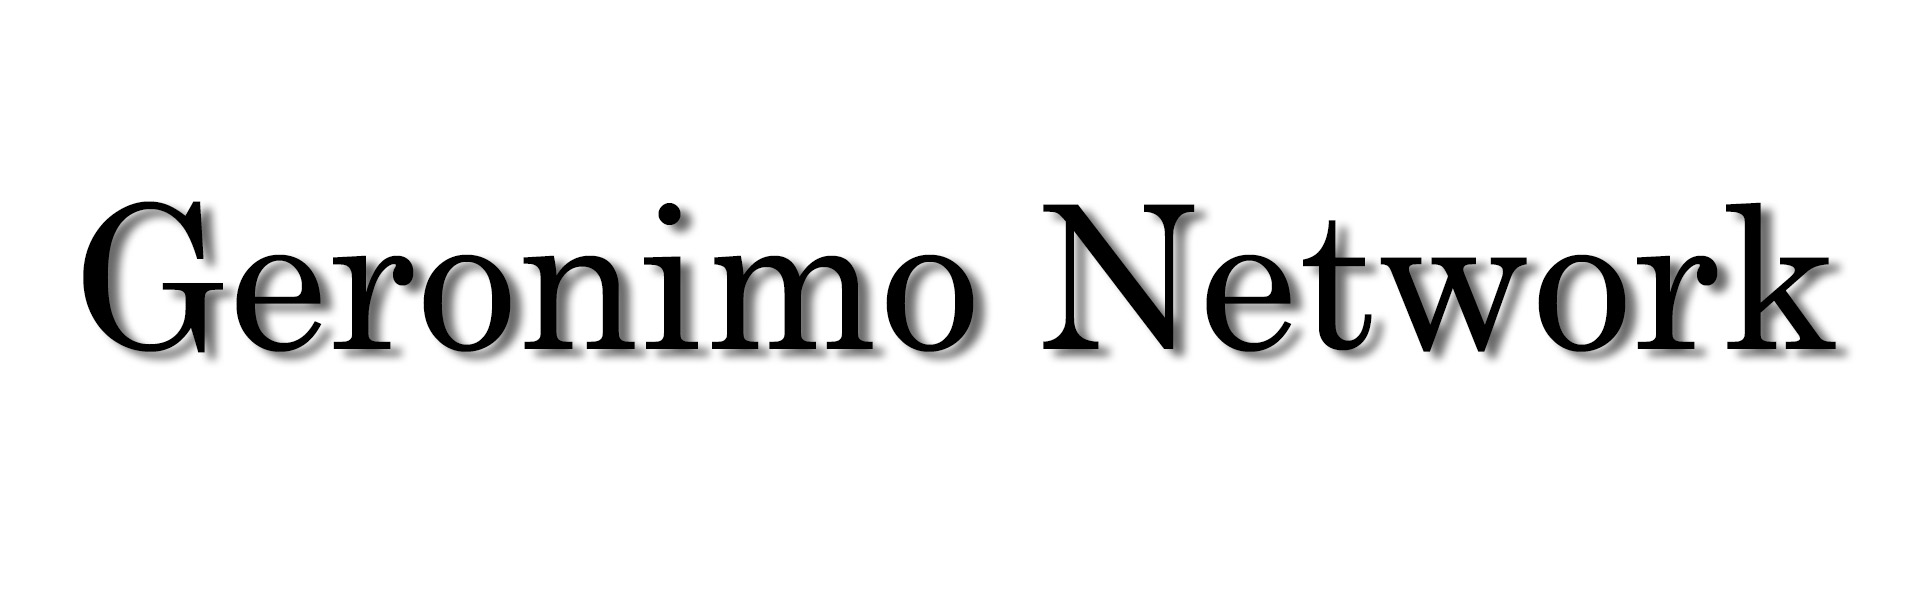 Geronimo Network